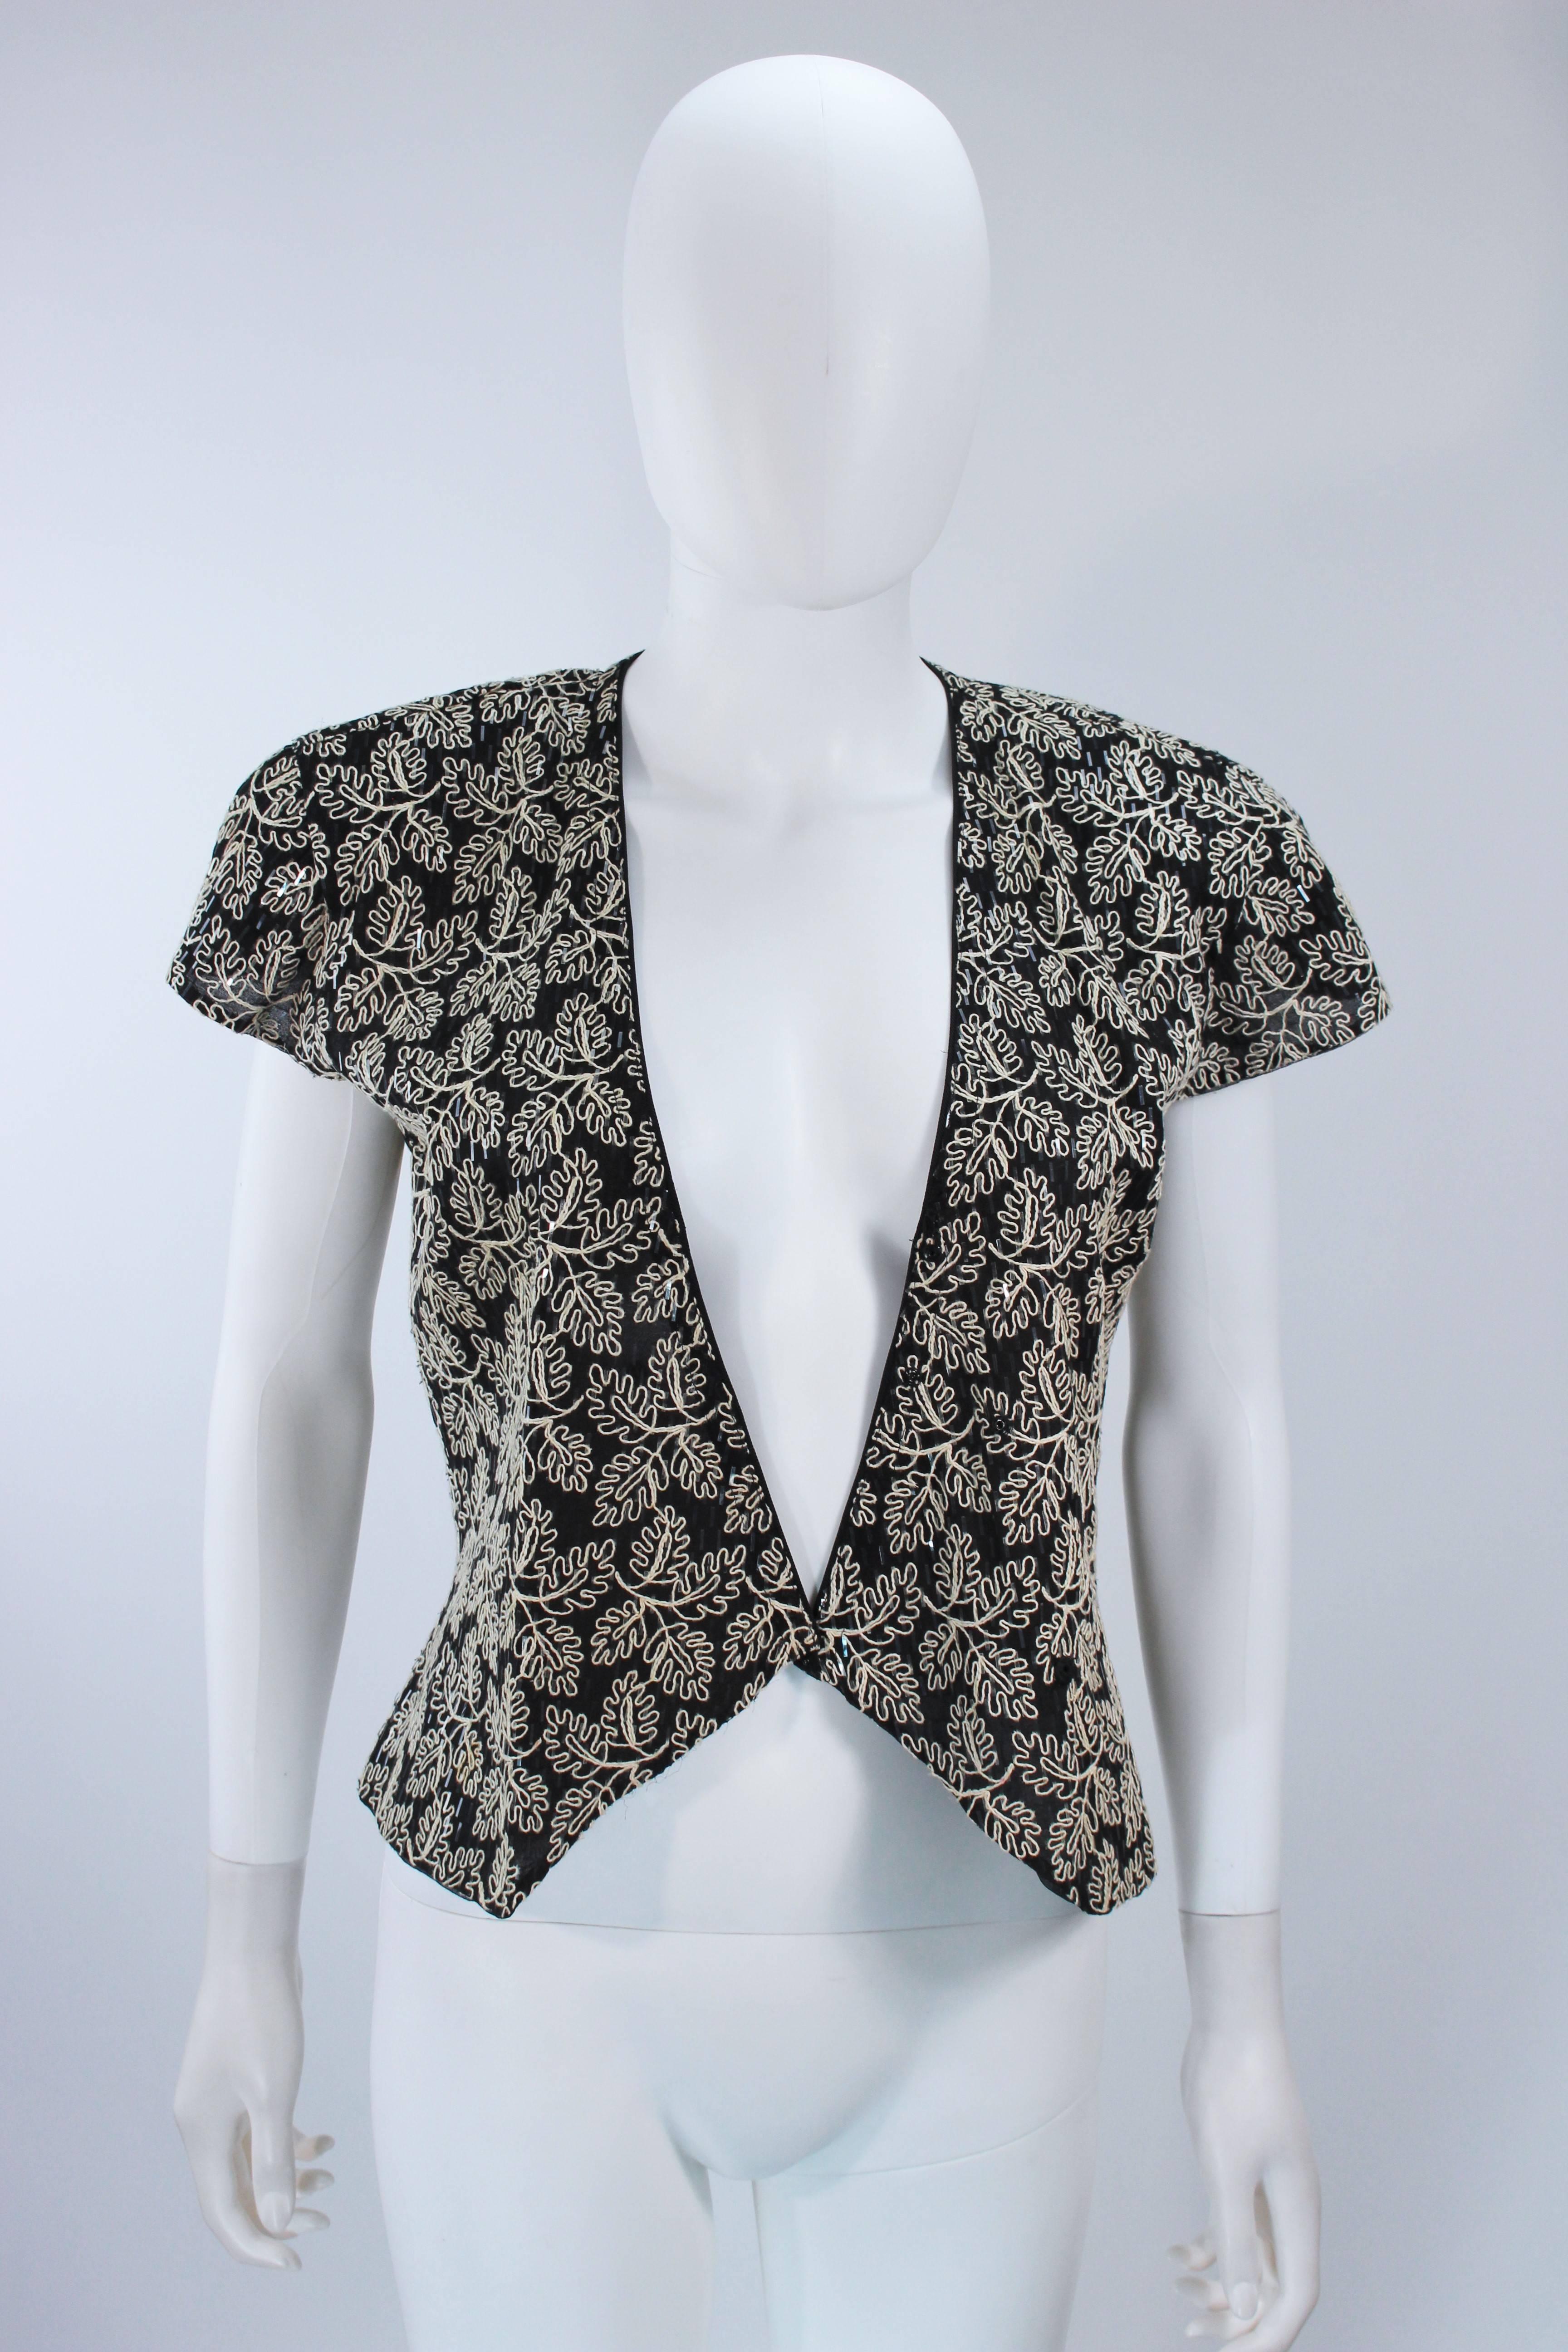 Women's GIORGIO ARMANI Black and White Floral Sequin Jacket Size 40